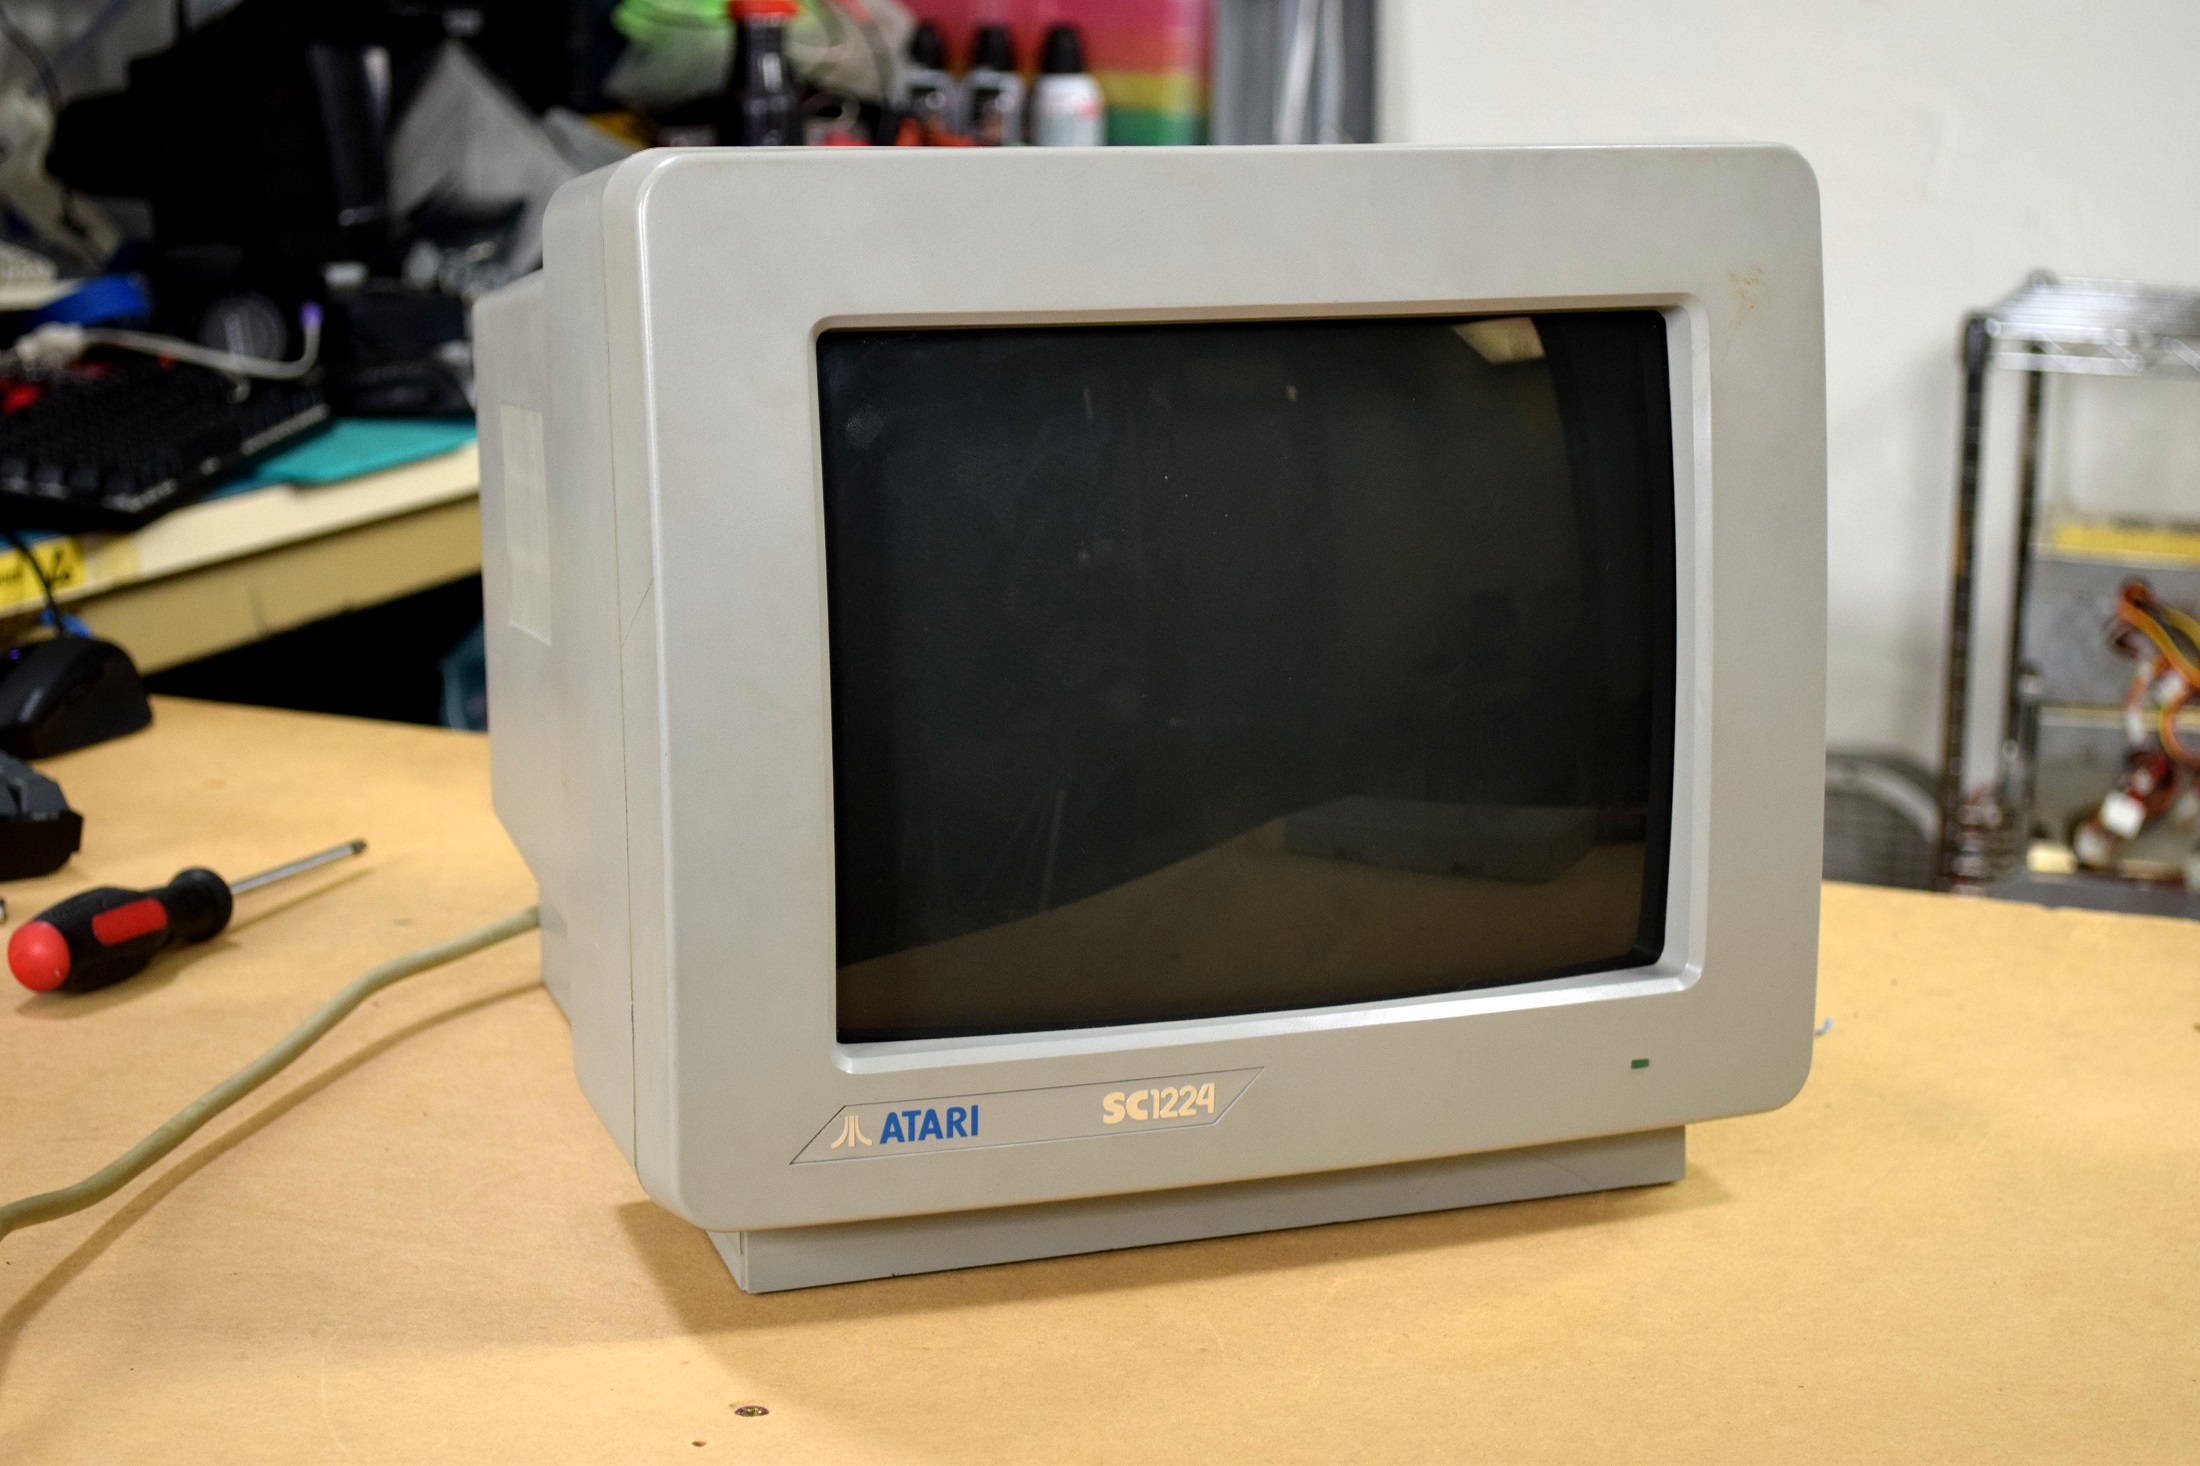 Atari SC1224: Monitor